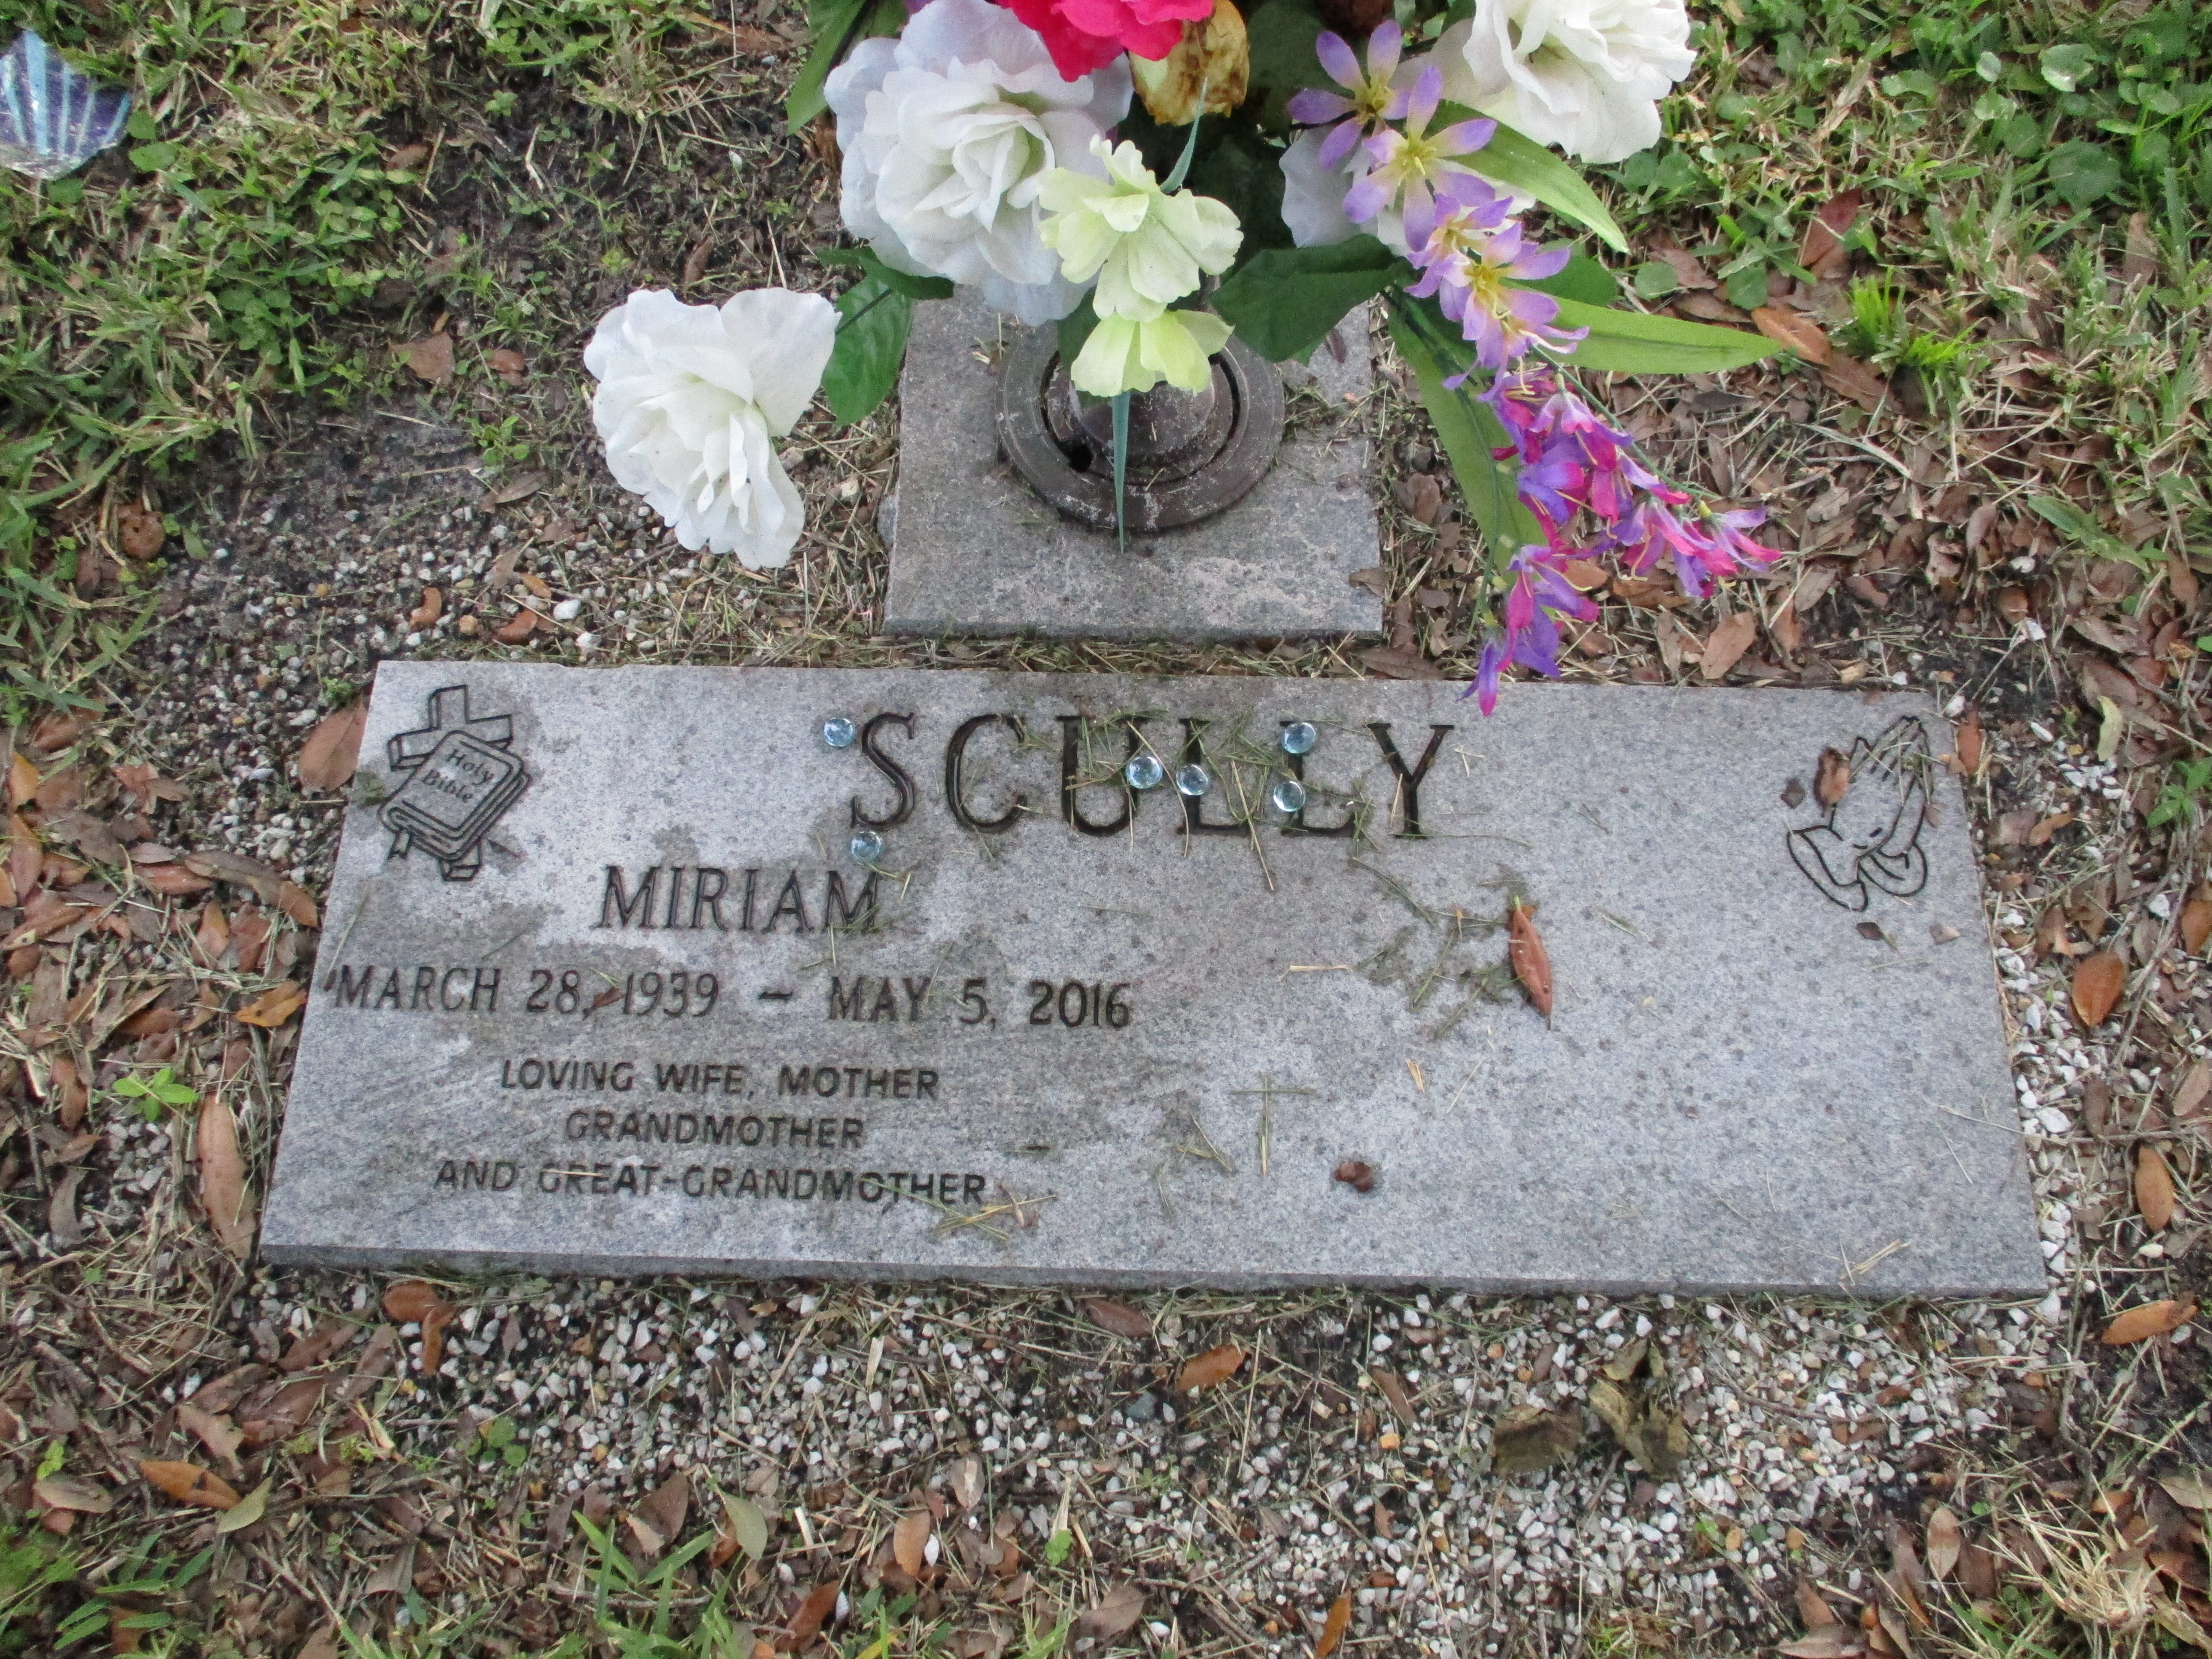 Miriam Scully